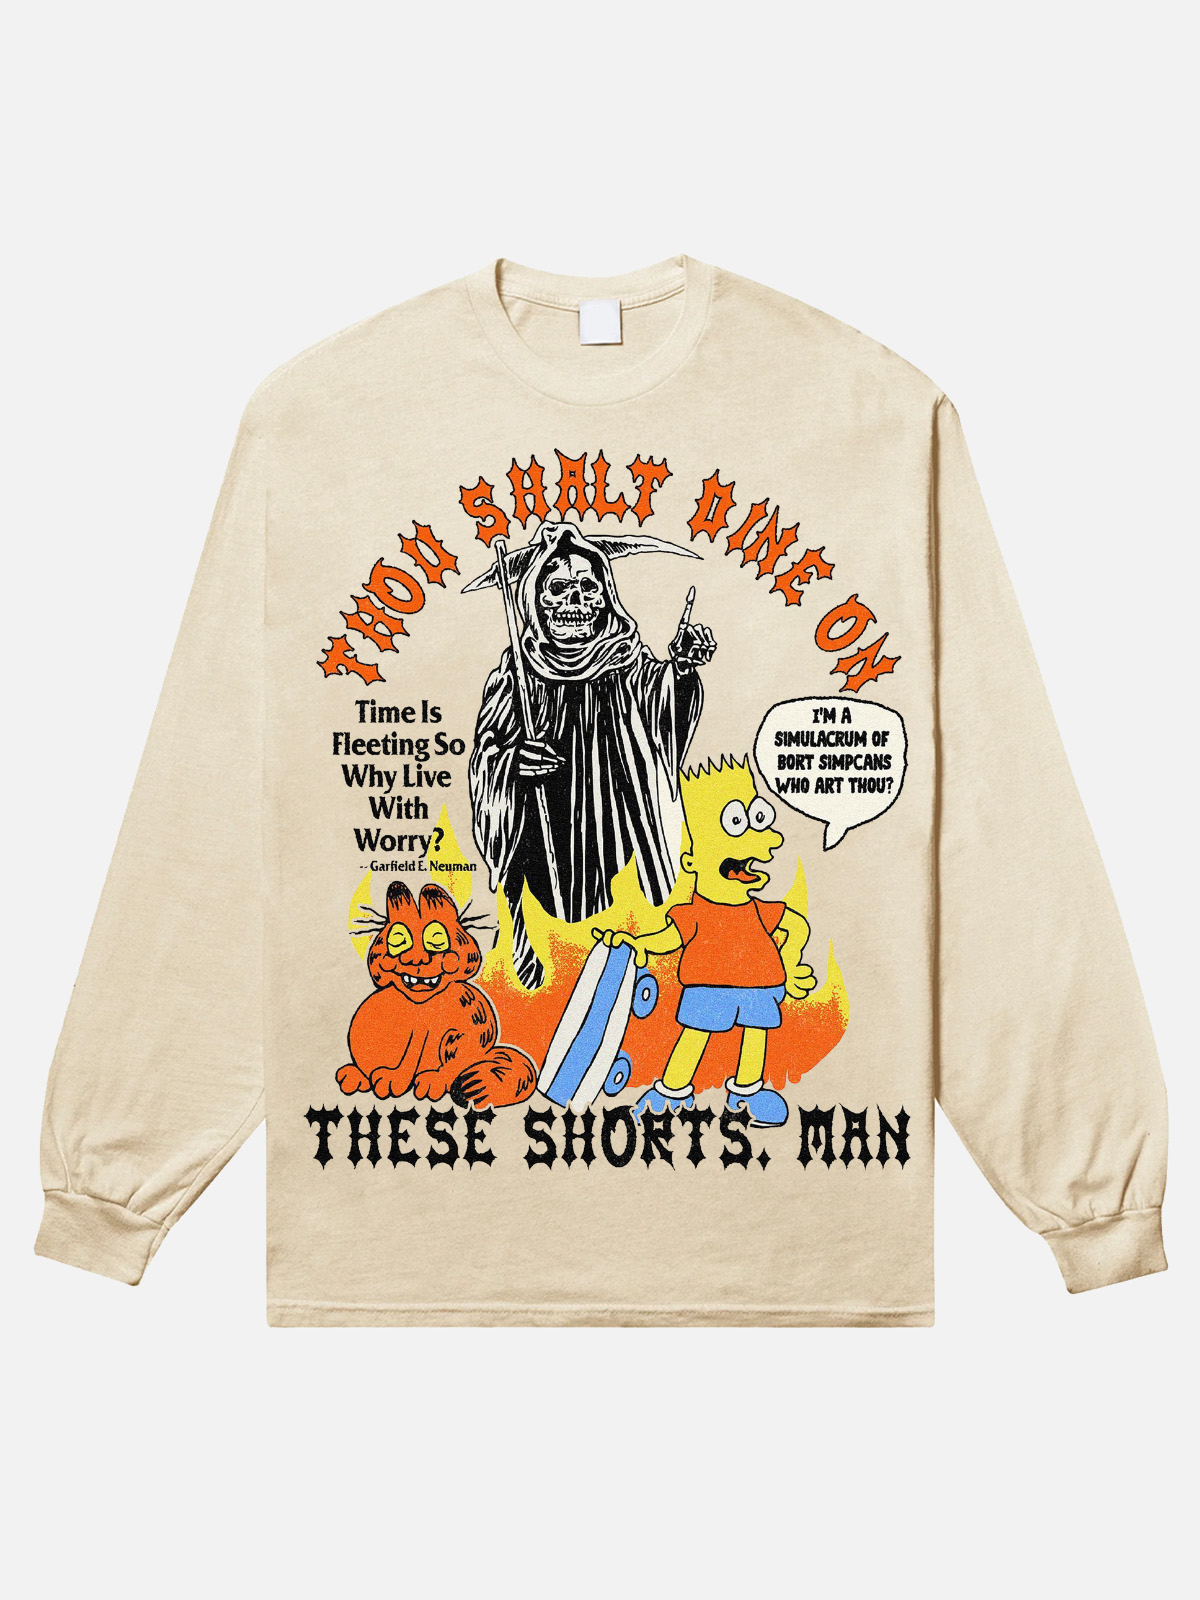 Thou Shalt Dine On These Shorts Man Long Sleeve T-Shirt